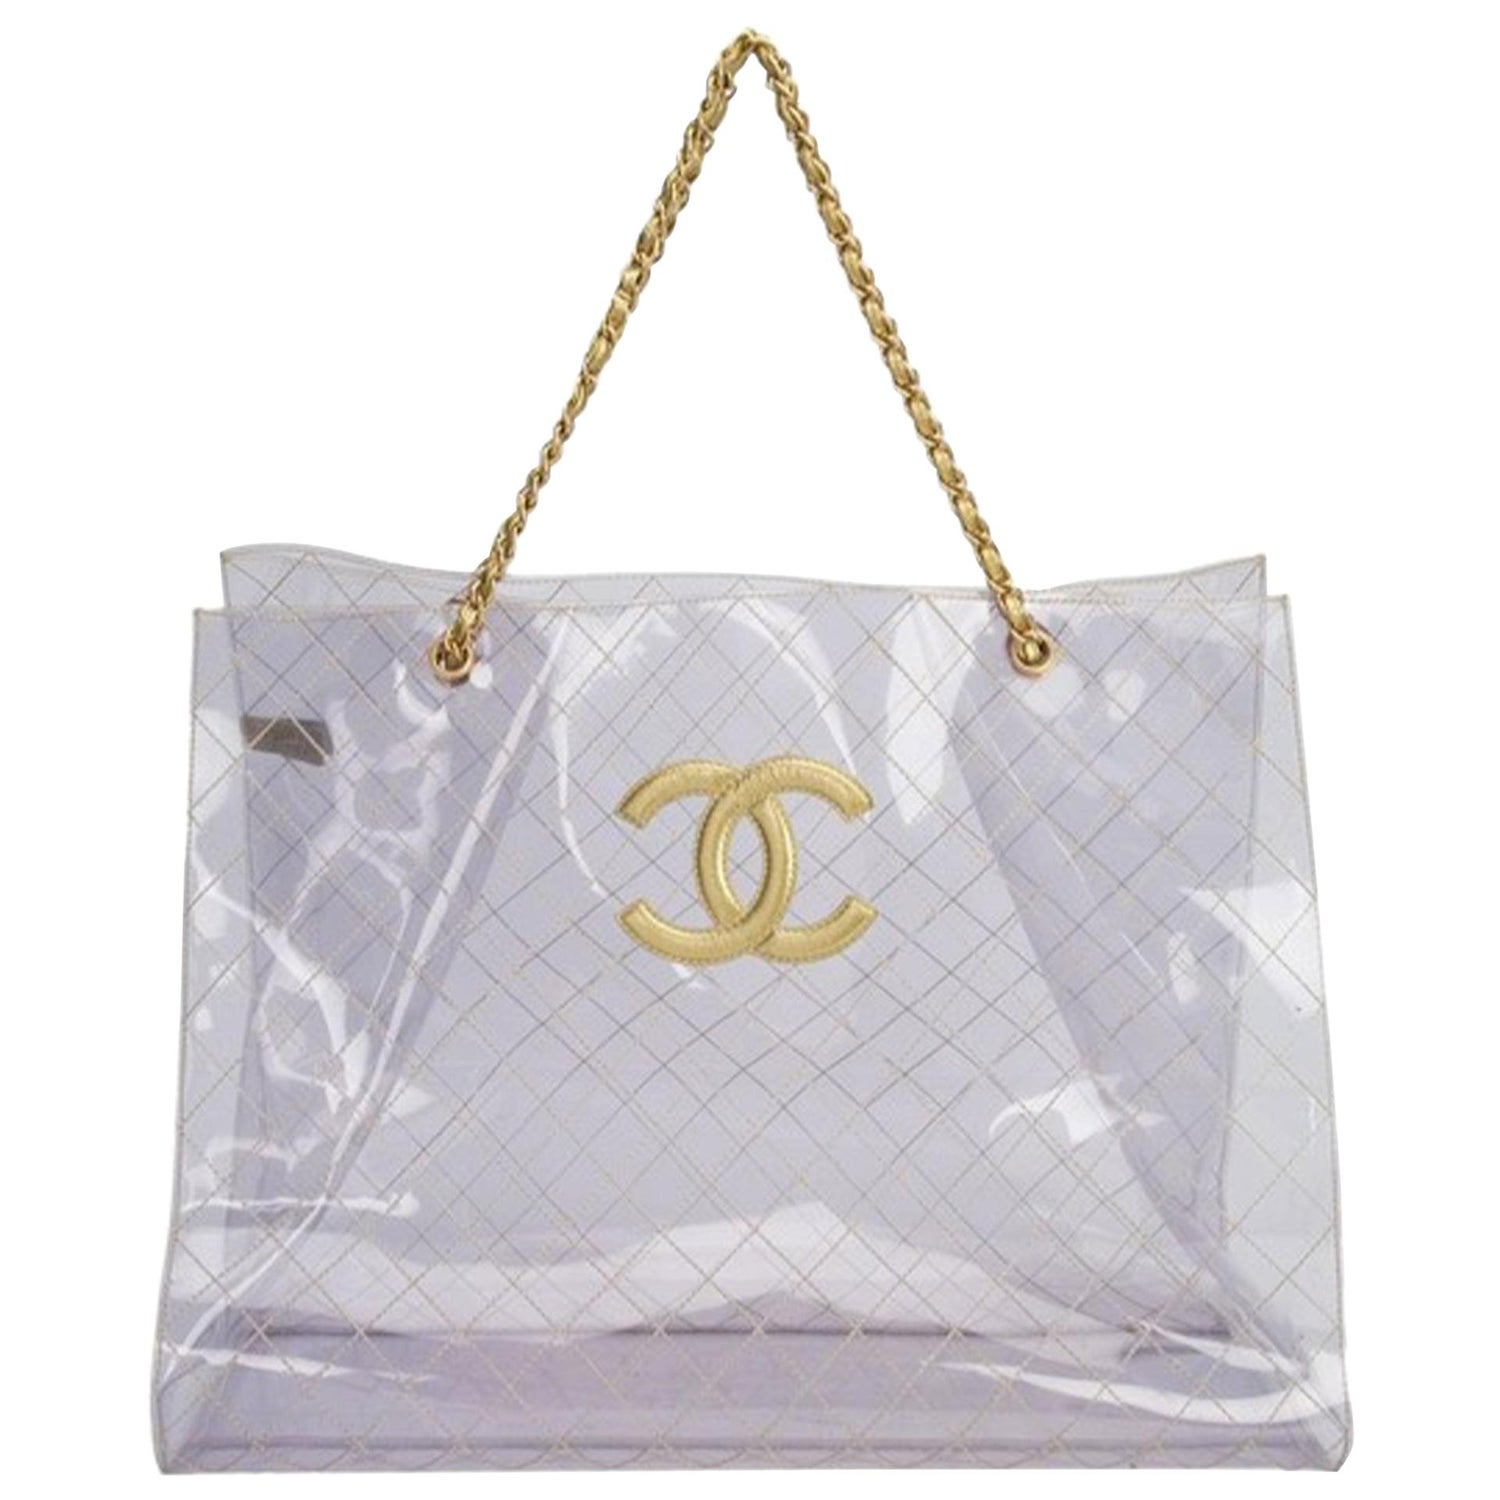 Chanel Hobo Handbag Transparent Teardrop Spring 2018 Clear